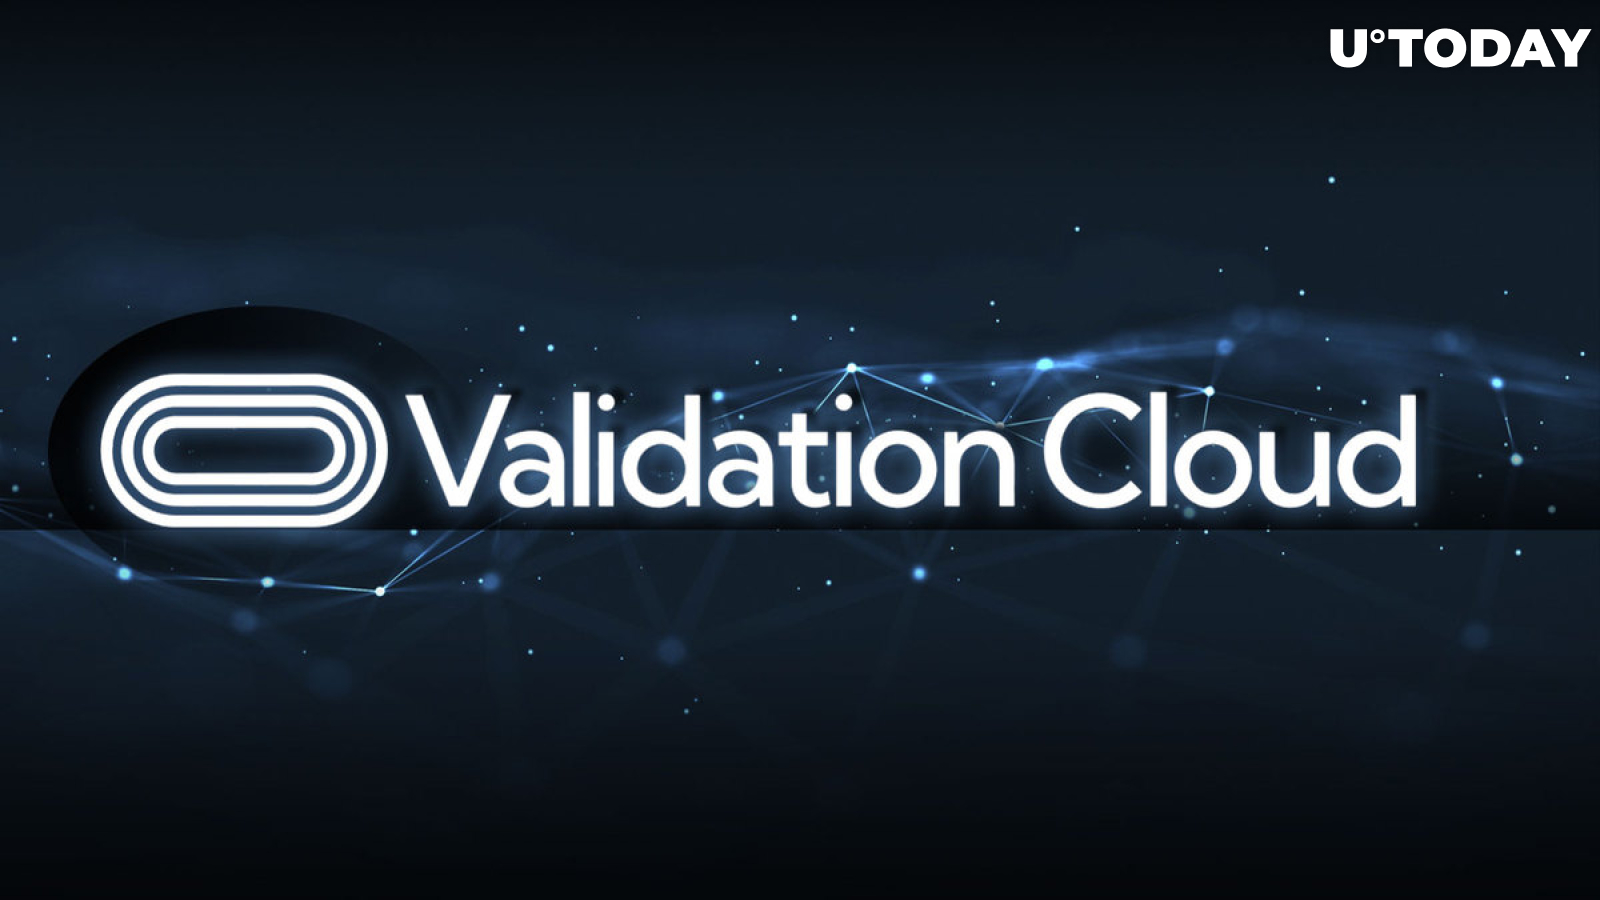 Validation Cloud Raises $5.8 Million From Top VCs